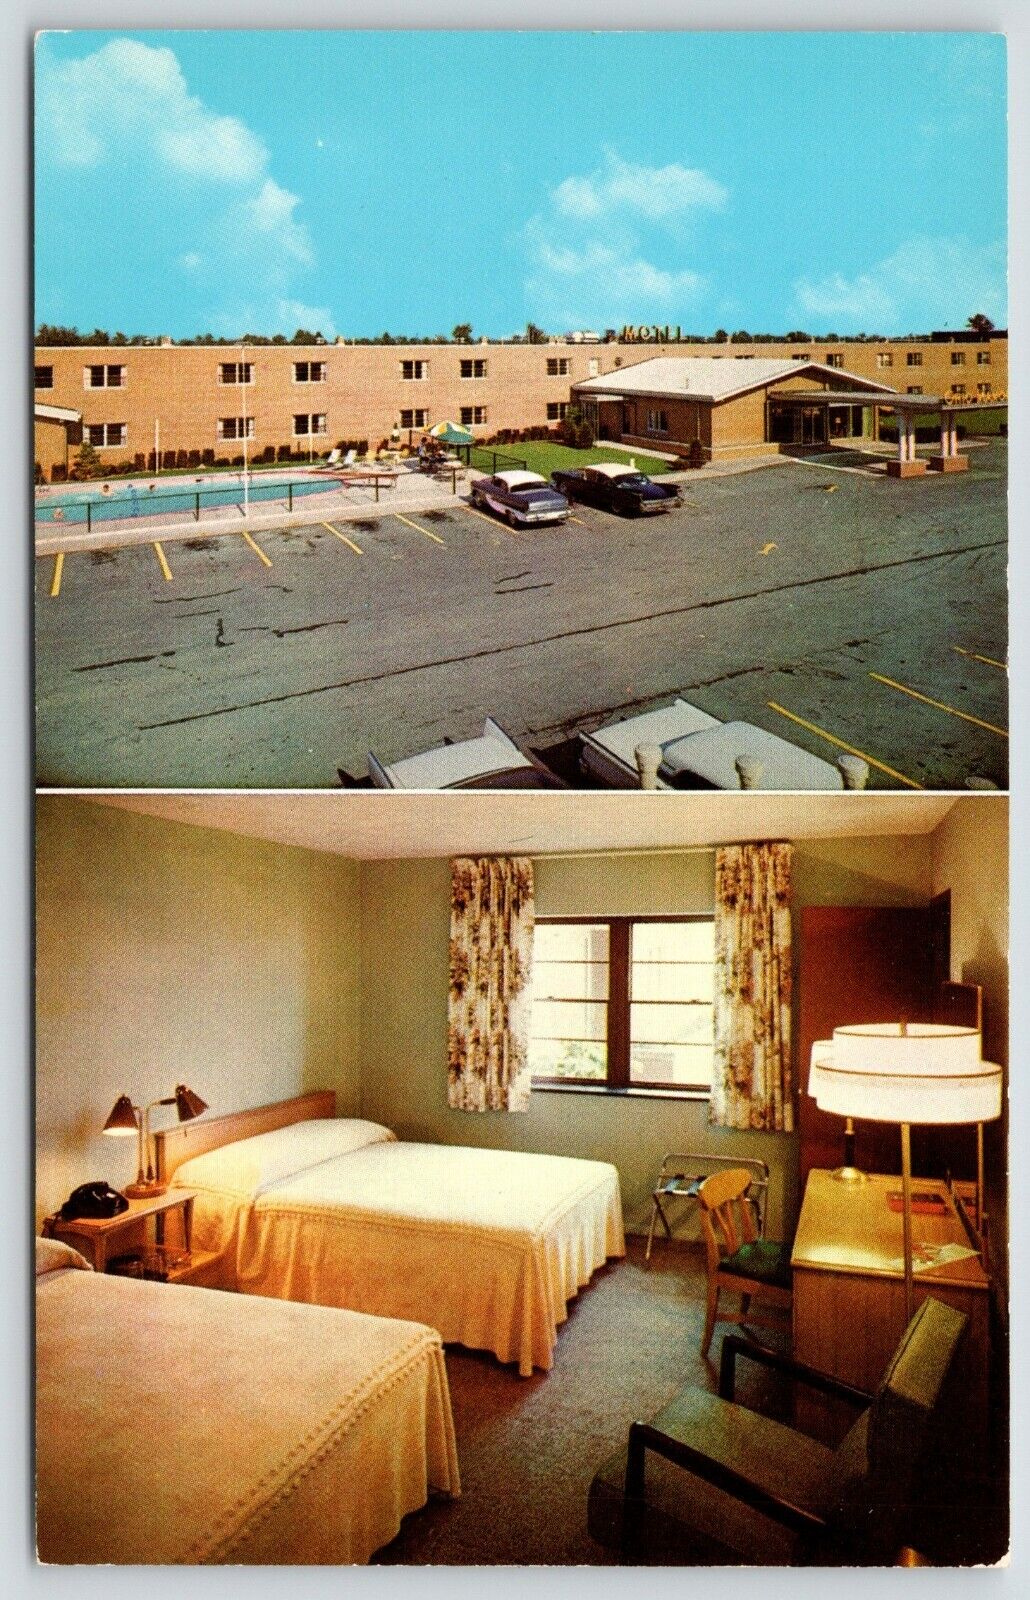 North Ridgeville Ohio~Ohio Manor Motel~Guest Room Interior~1950s Cars by Pool